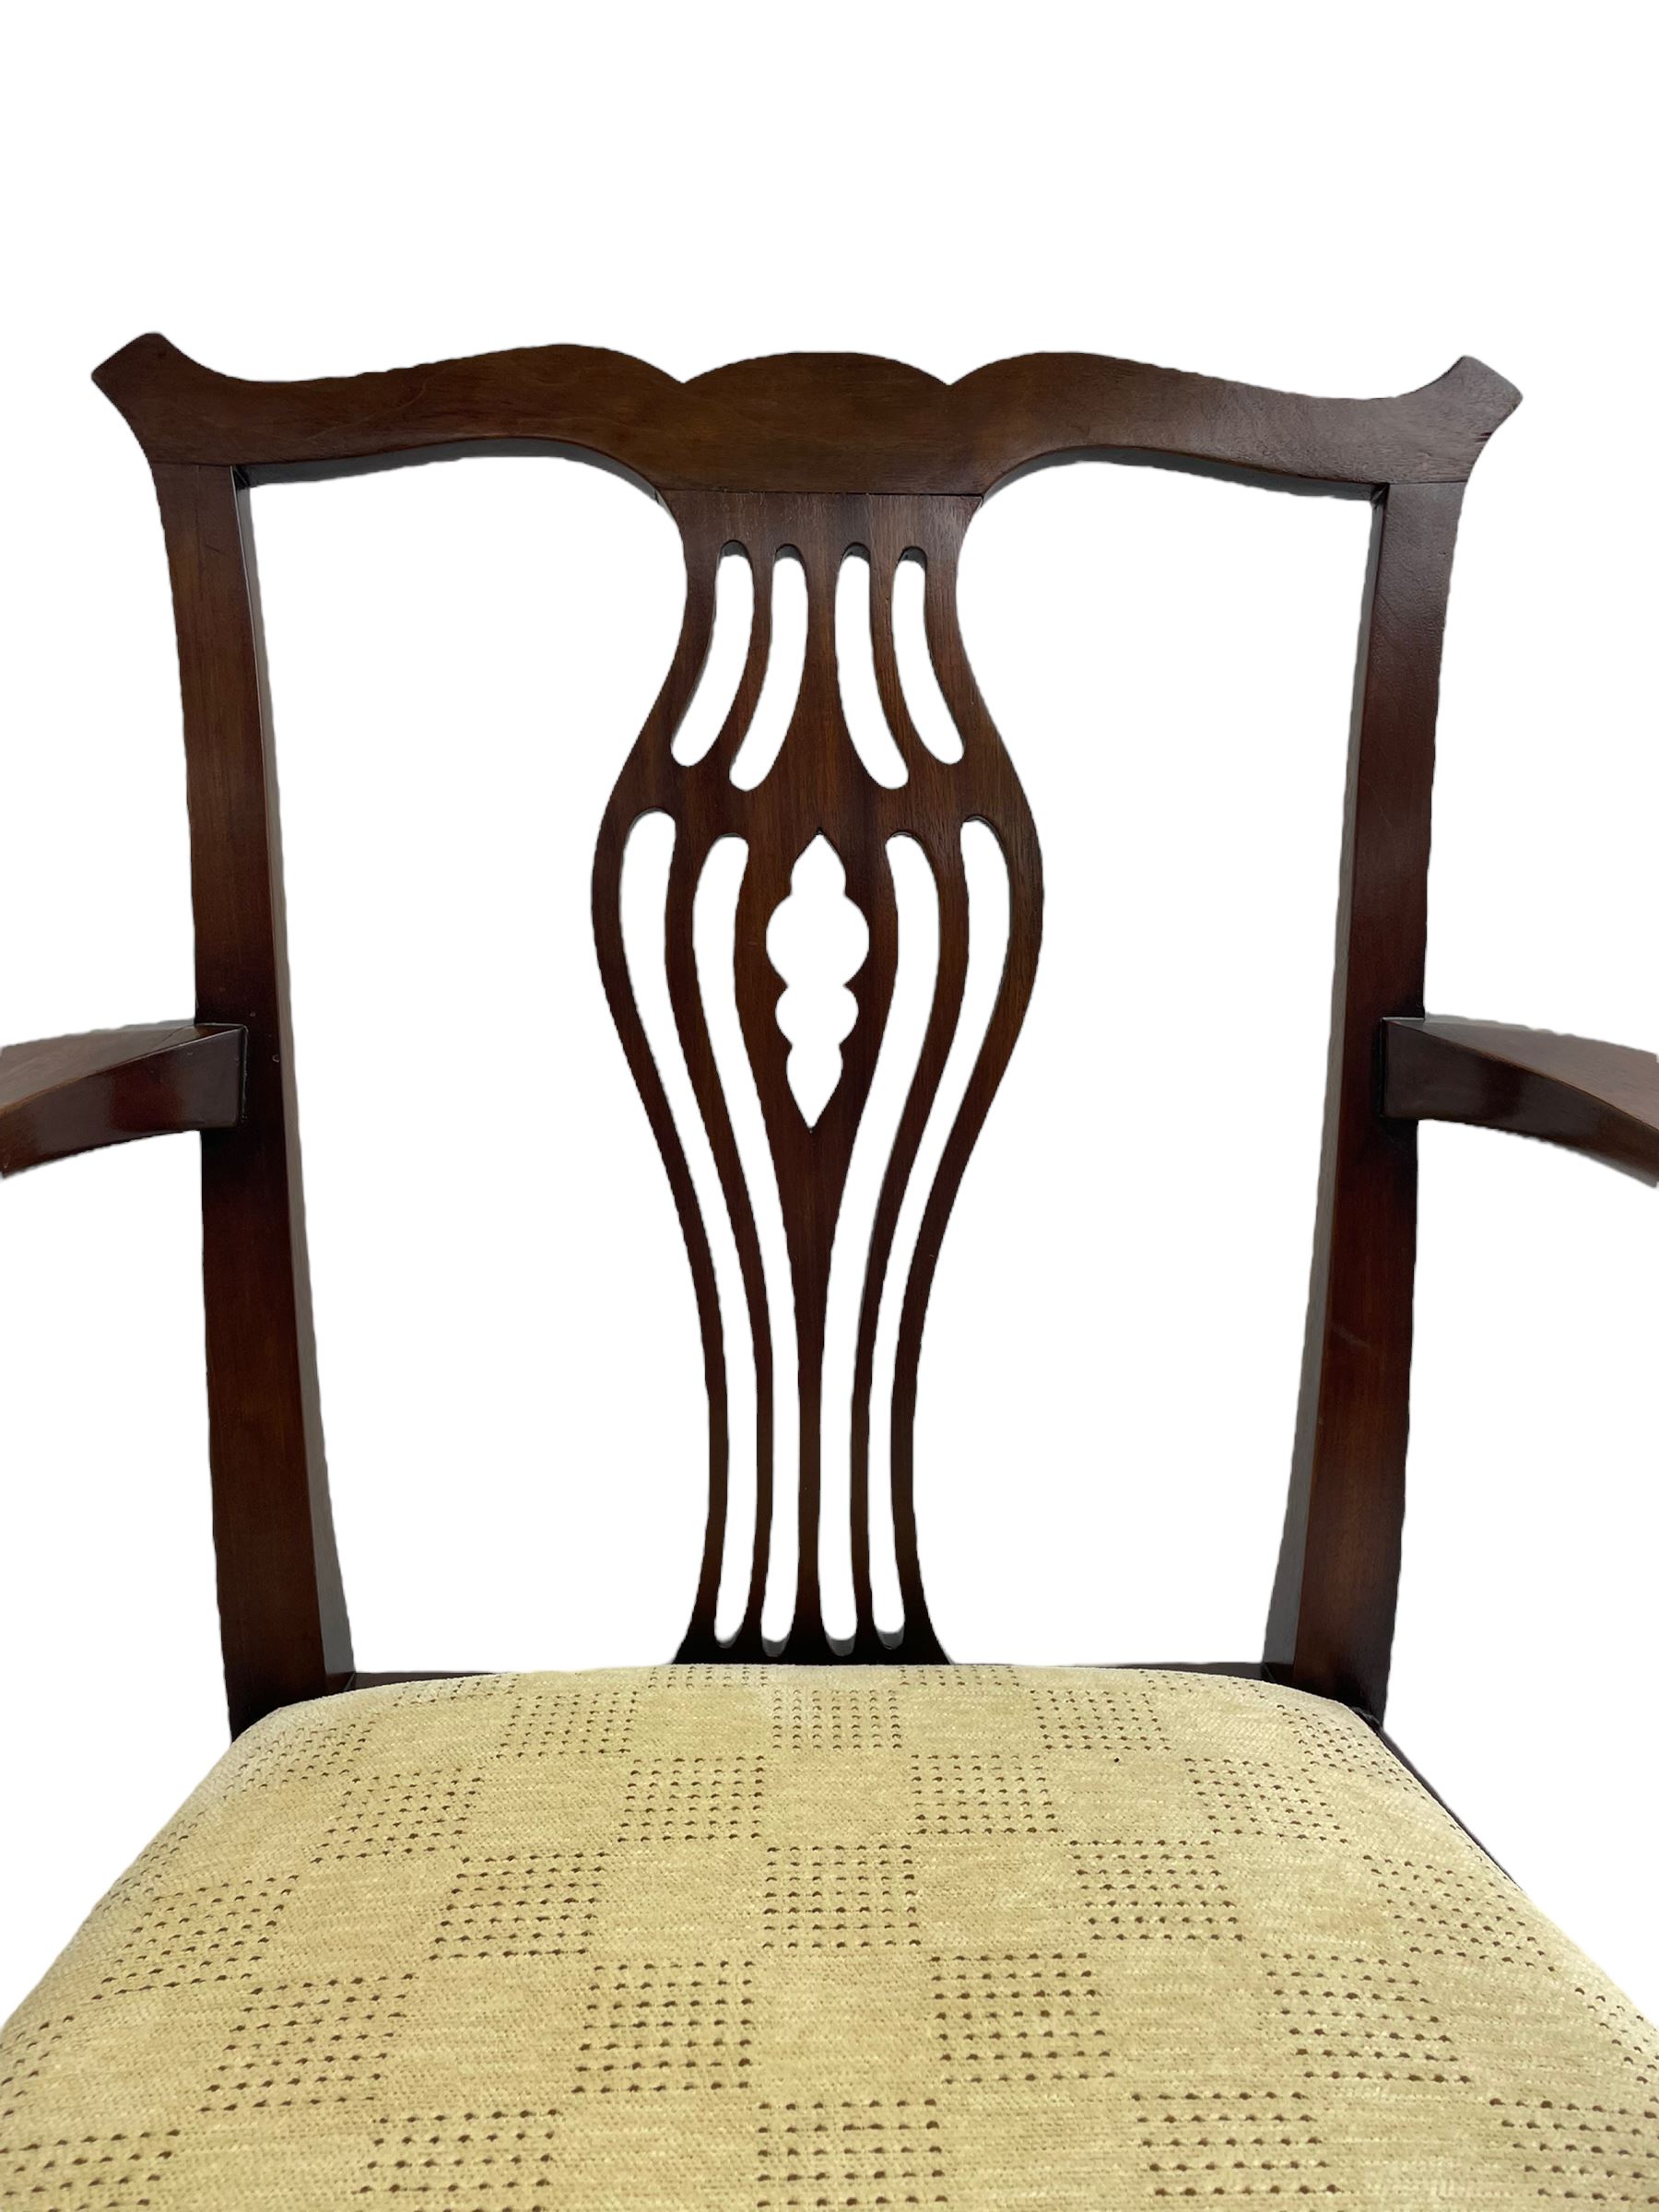 Set six (1+5) George III design mahogany dining chairs - Image 11 of 12